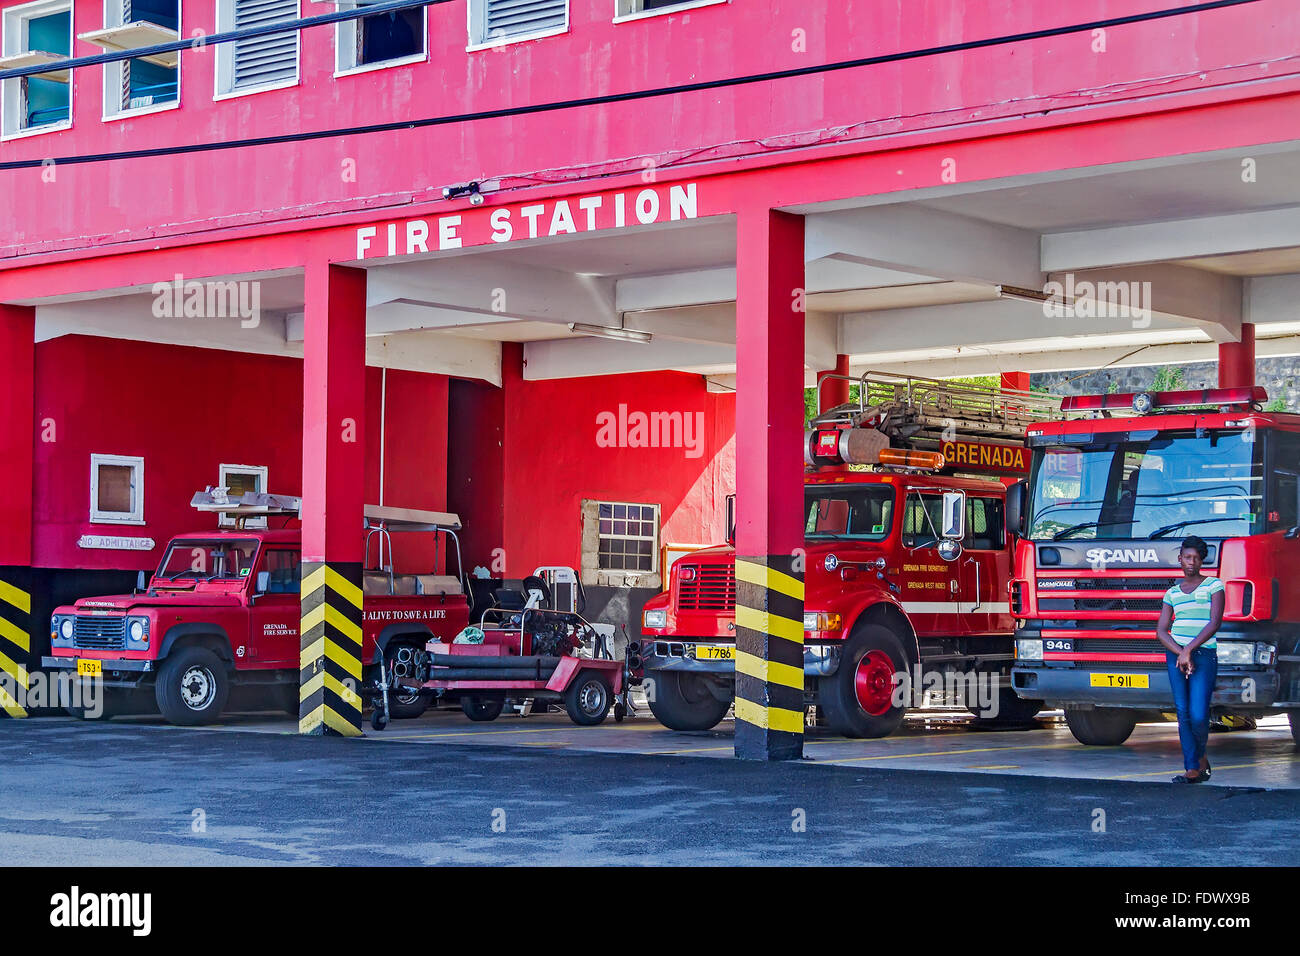 Firestation Saint George's Grenada West Indies Stock Photo